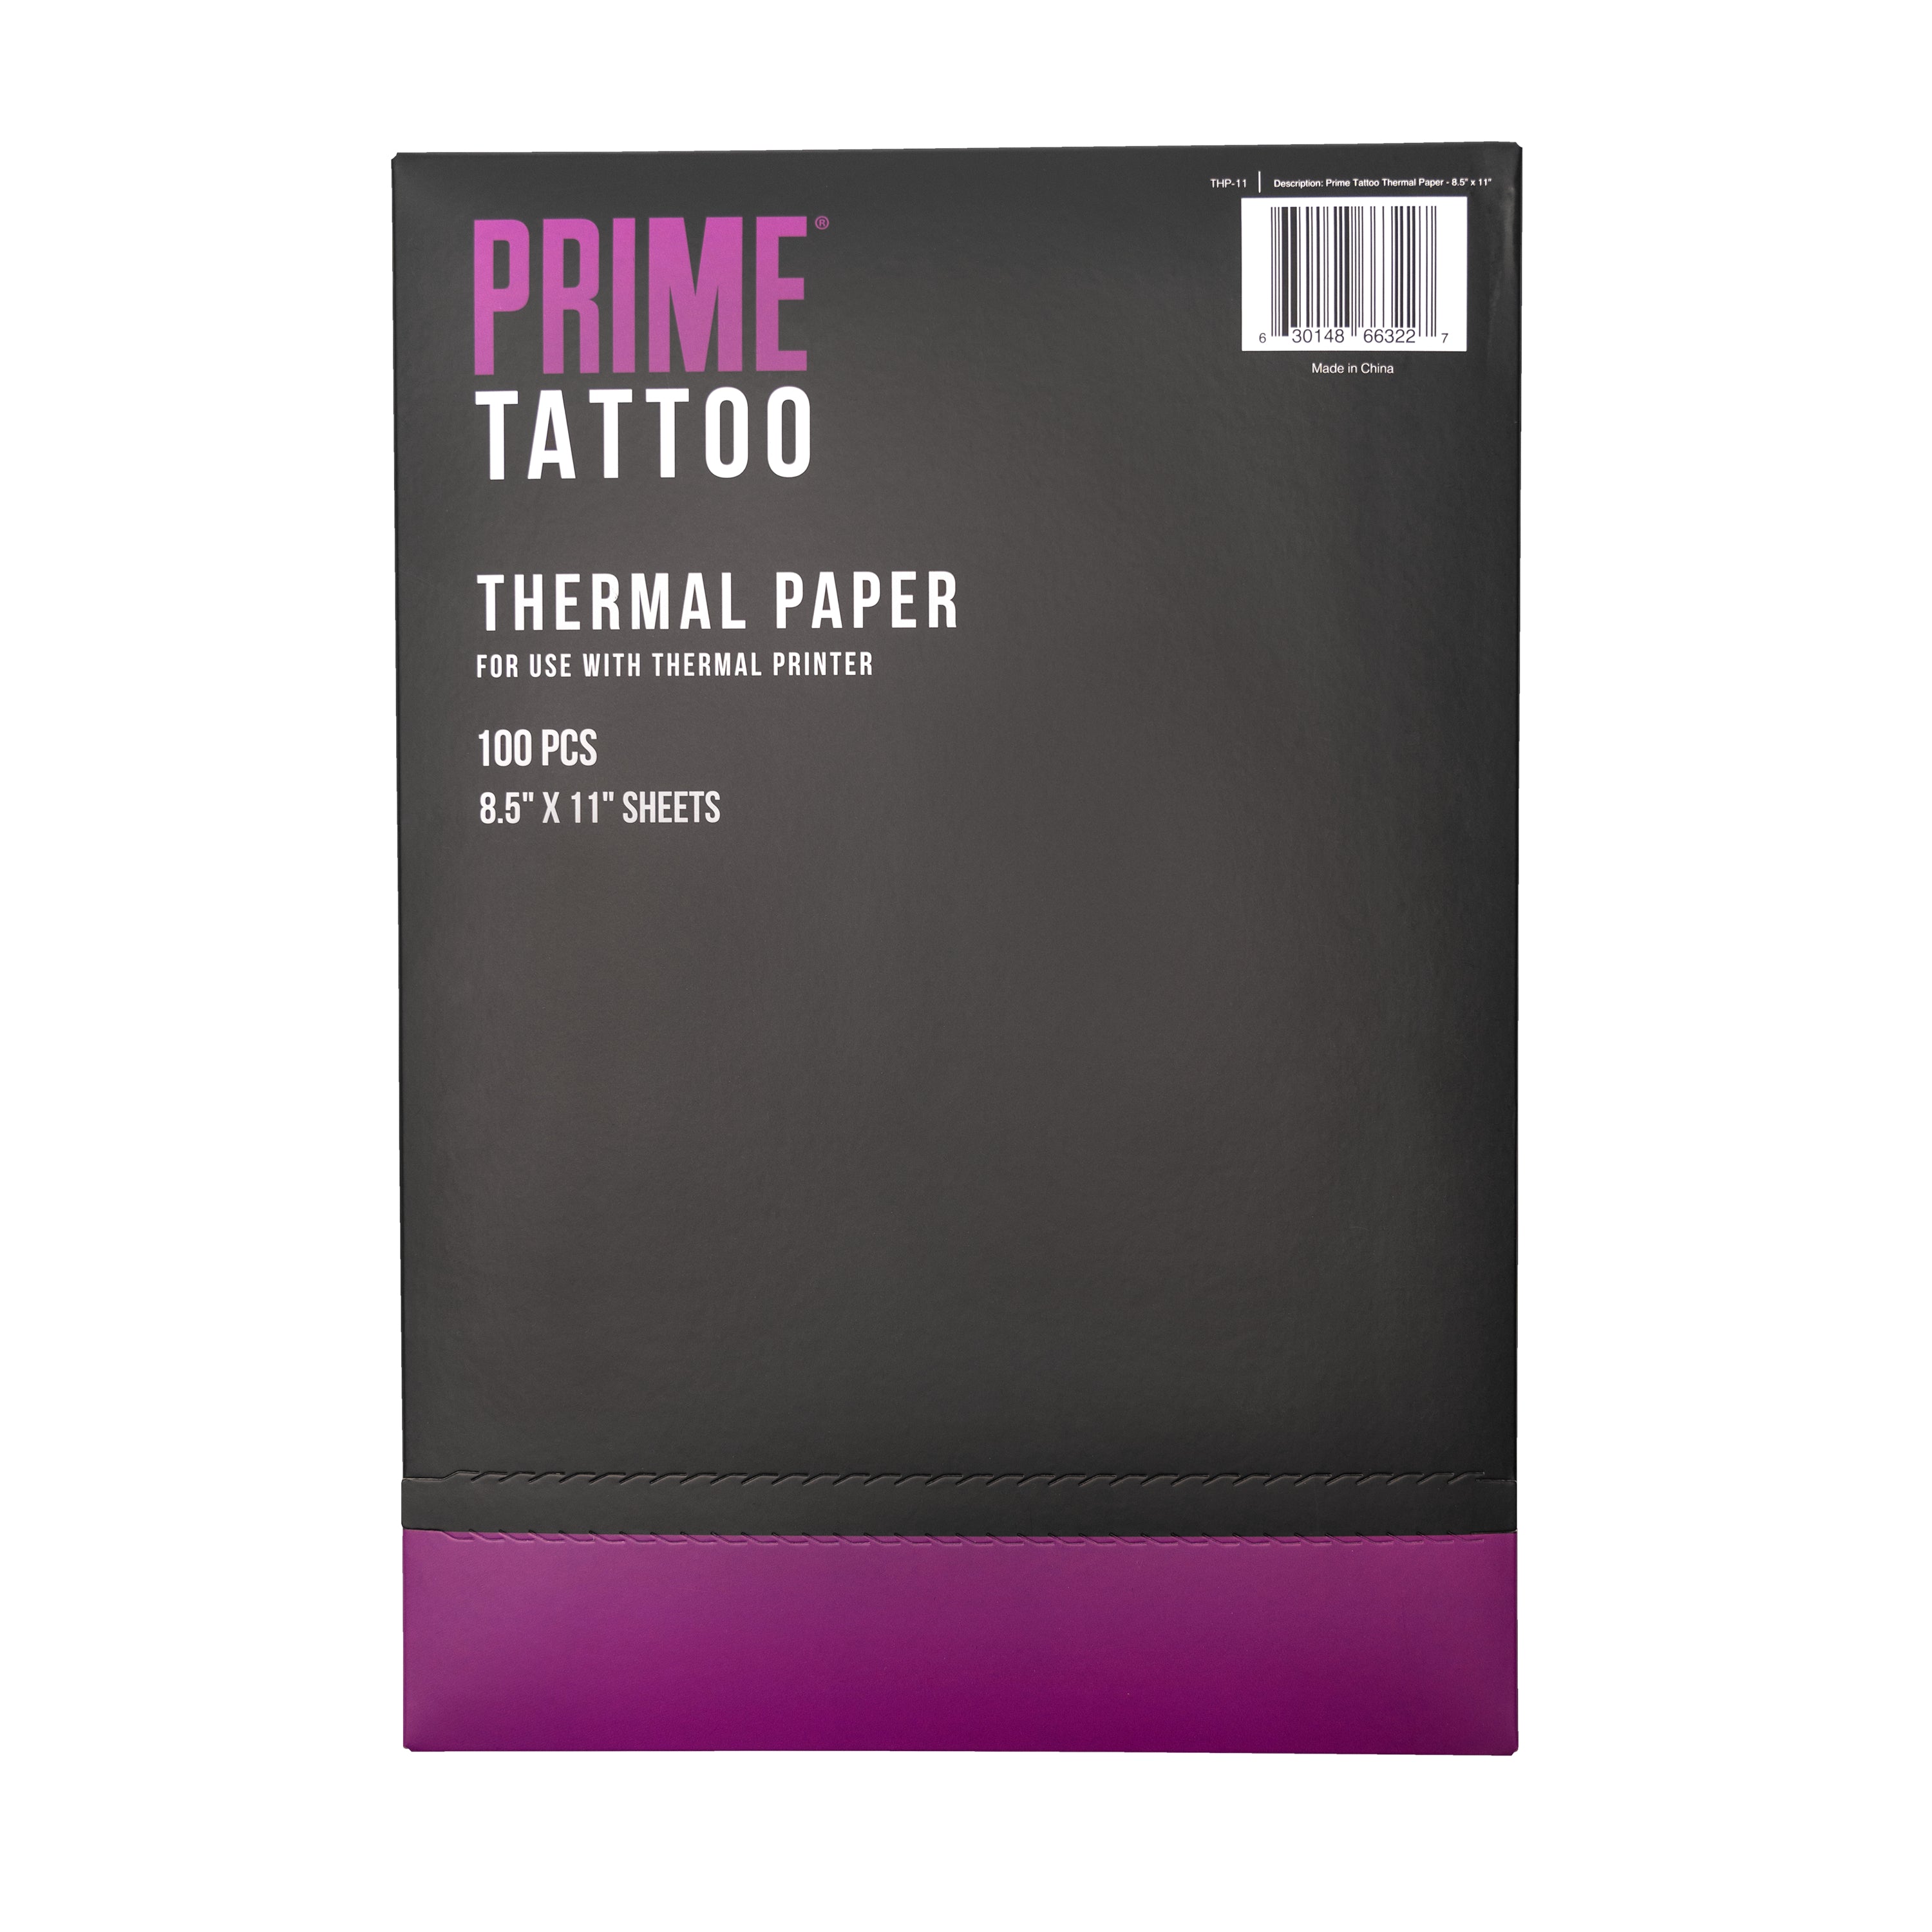 Spirit Classic Thermal Tattoo Transfer Paper - 8.5 x 11 100 Sheets